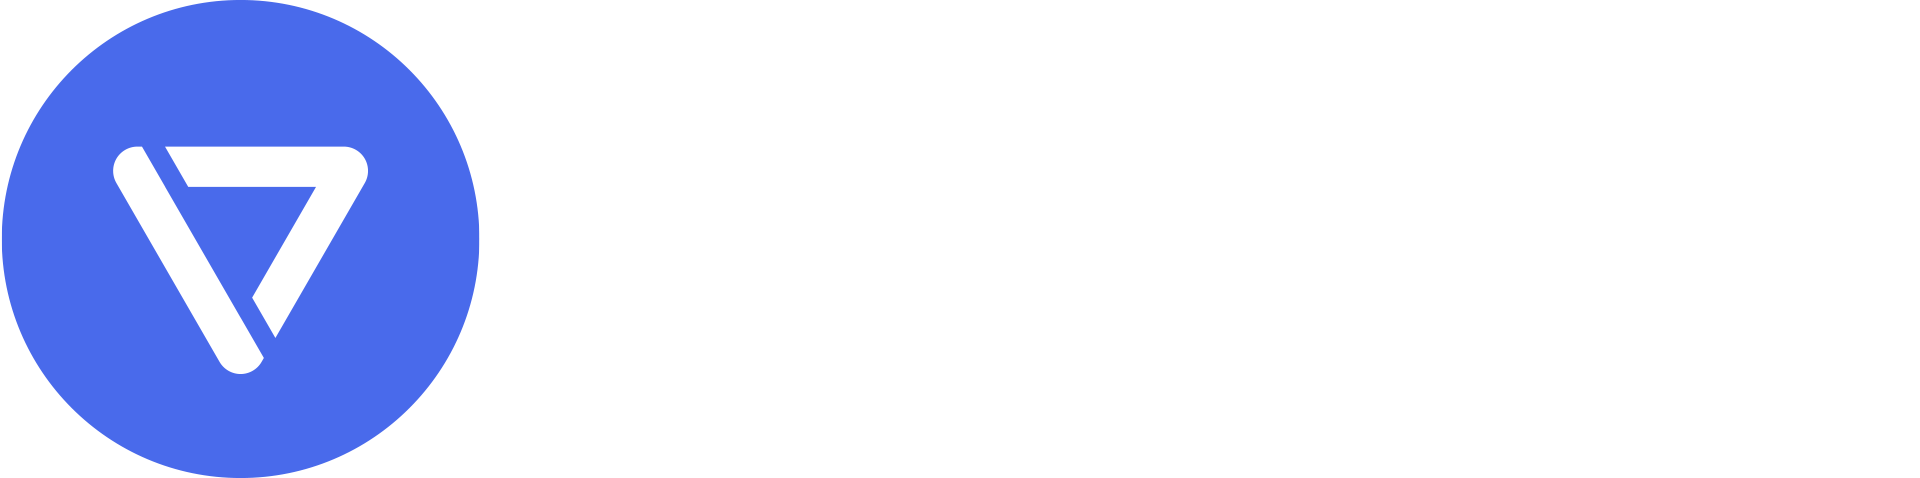 tonstarter